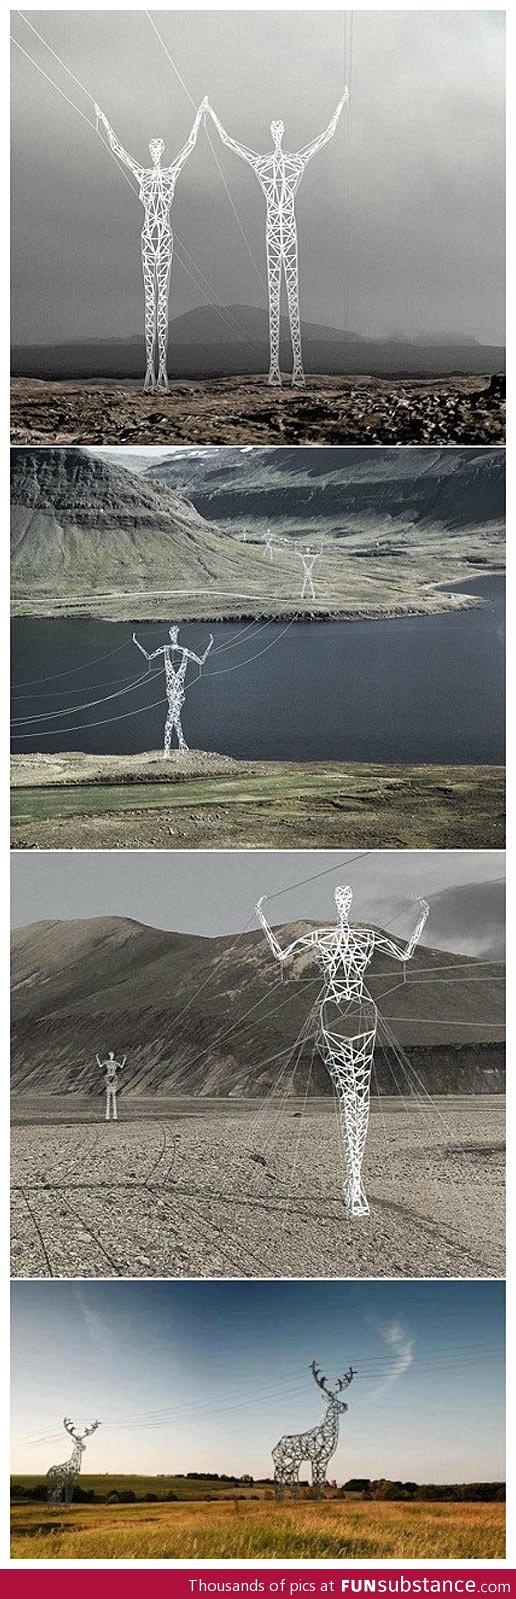 Iceland electric poles